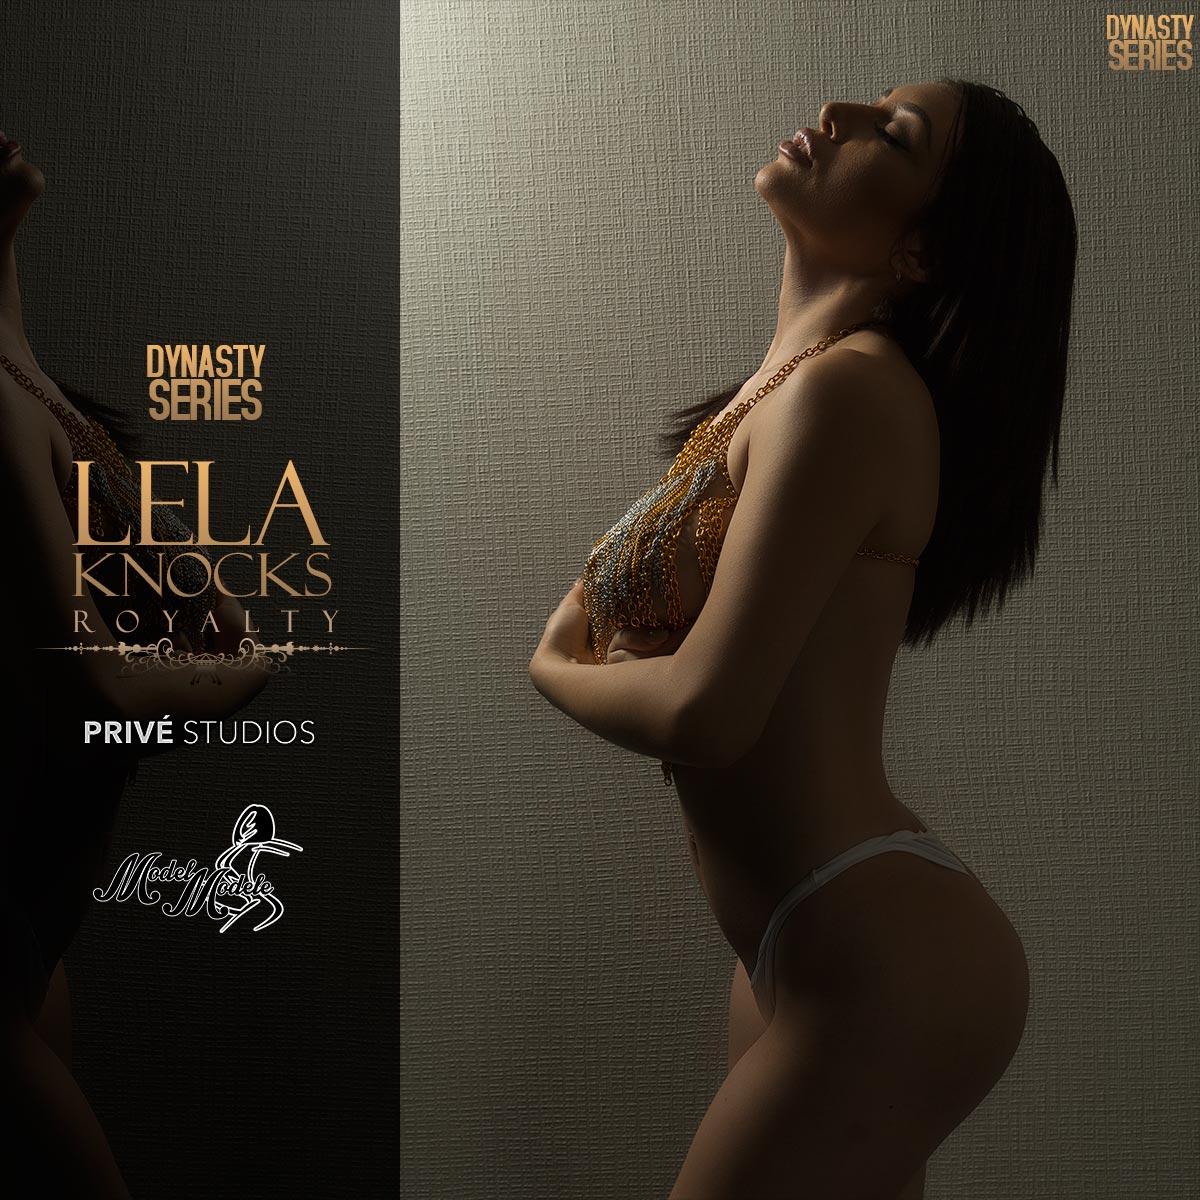 Lela Knocks @lelaknocks: Royalty – Prive Studios and Model Modele